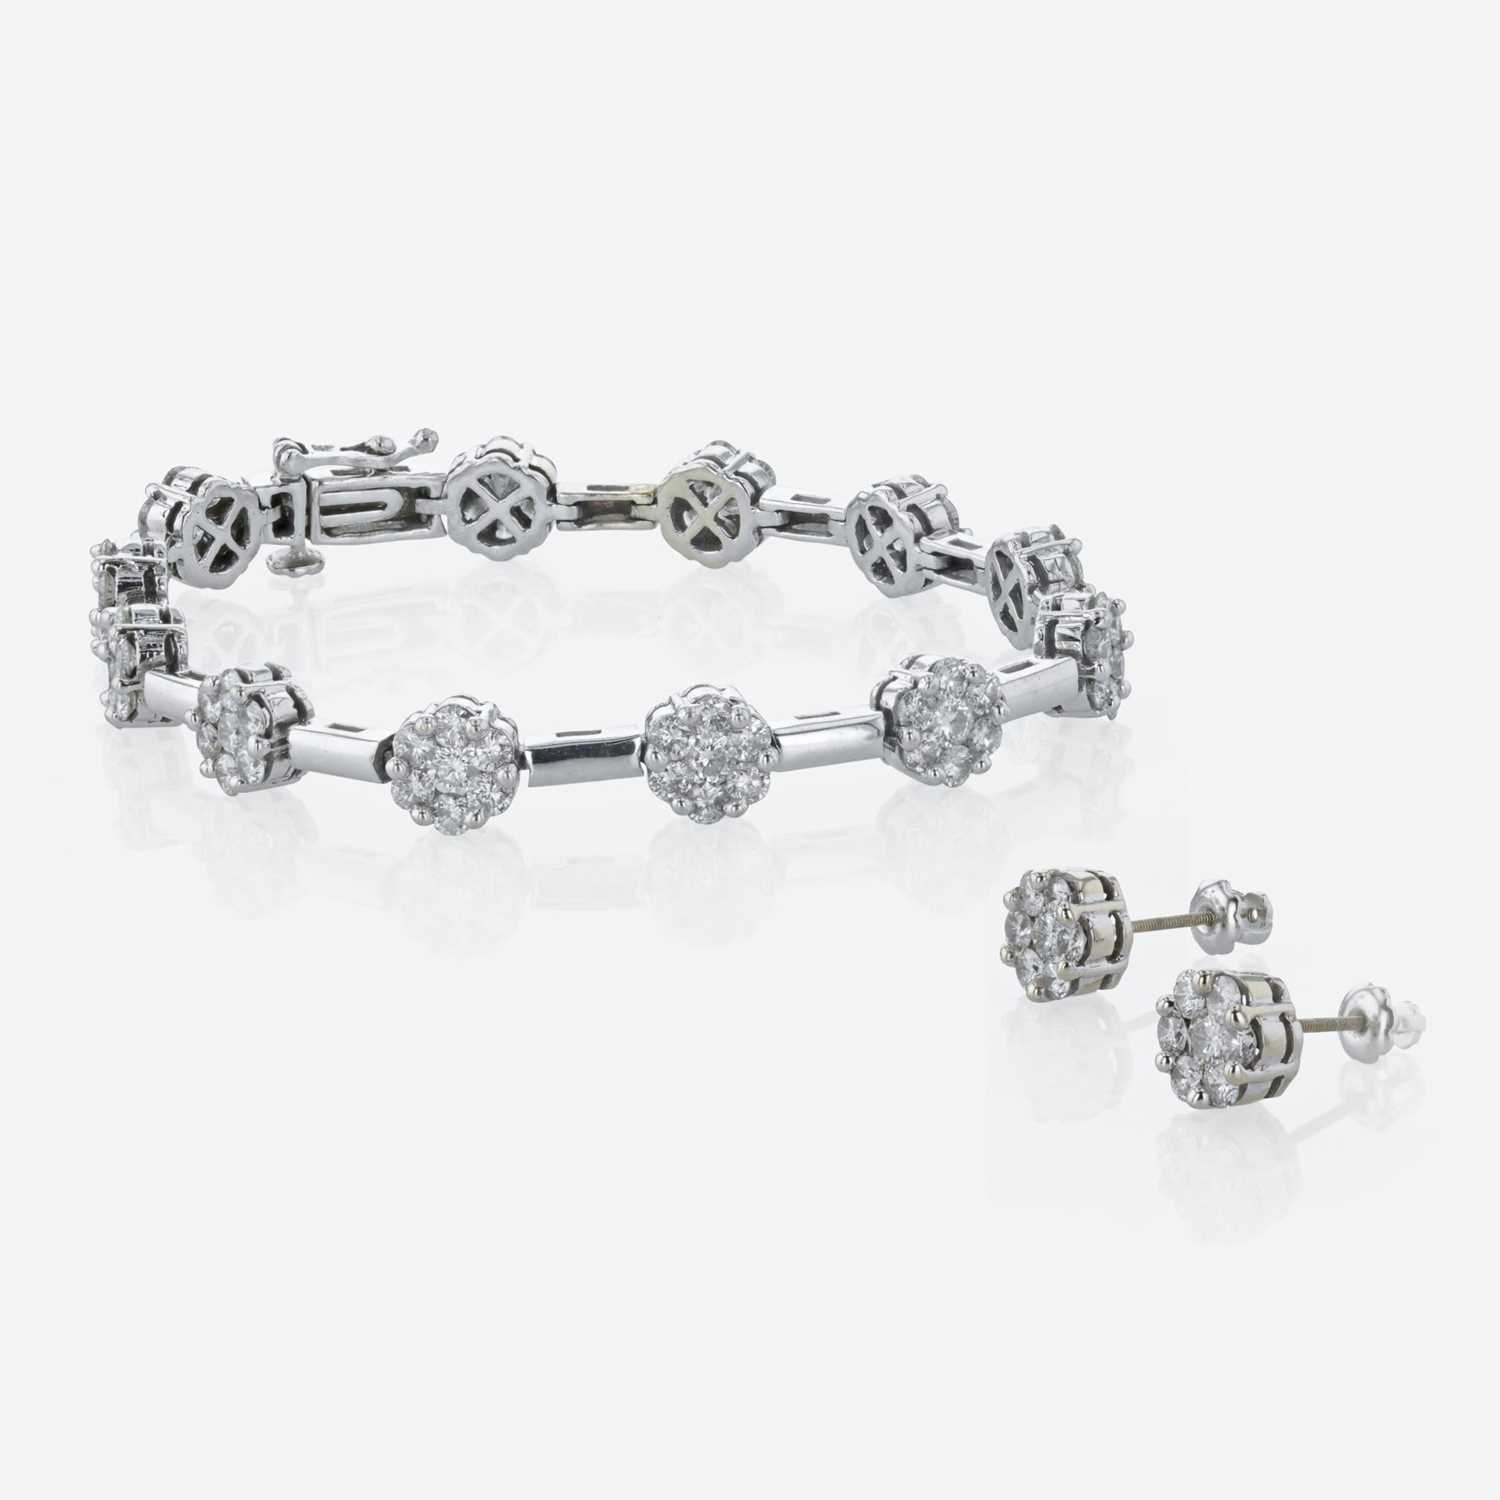 Lot 69 - A diamond bracelet and matching diamond stud earrings